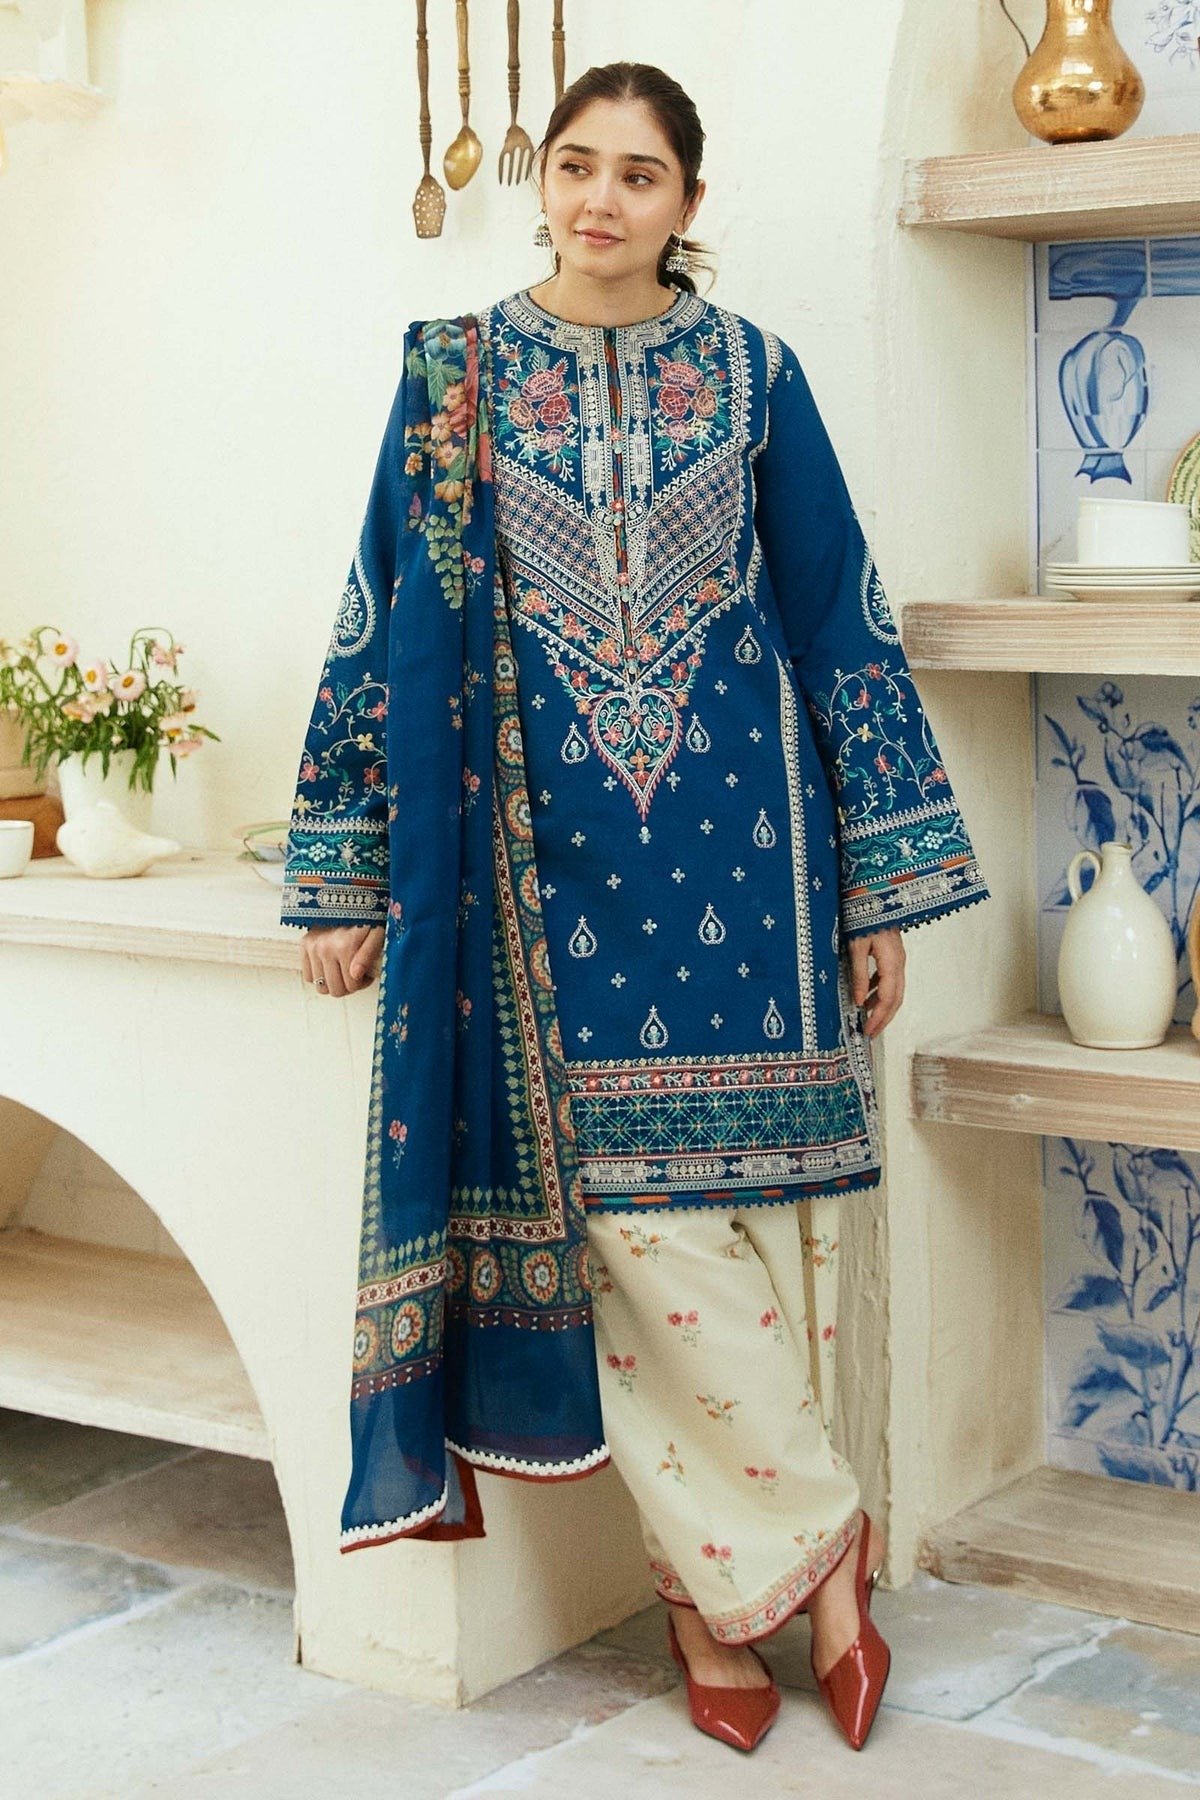 Zara Shah Jahan women new dress design empires collection pakistan girls fashion clothing suit 3piece top brand